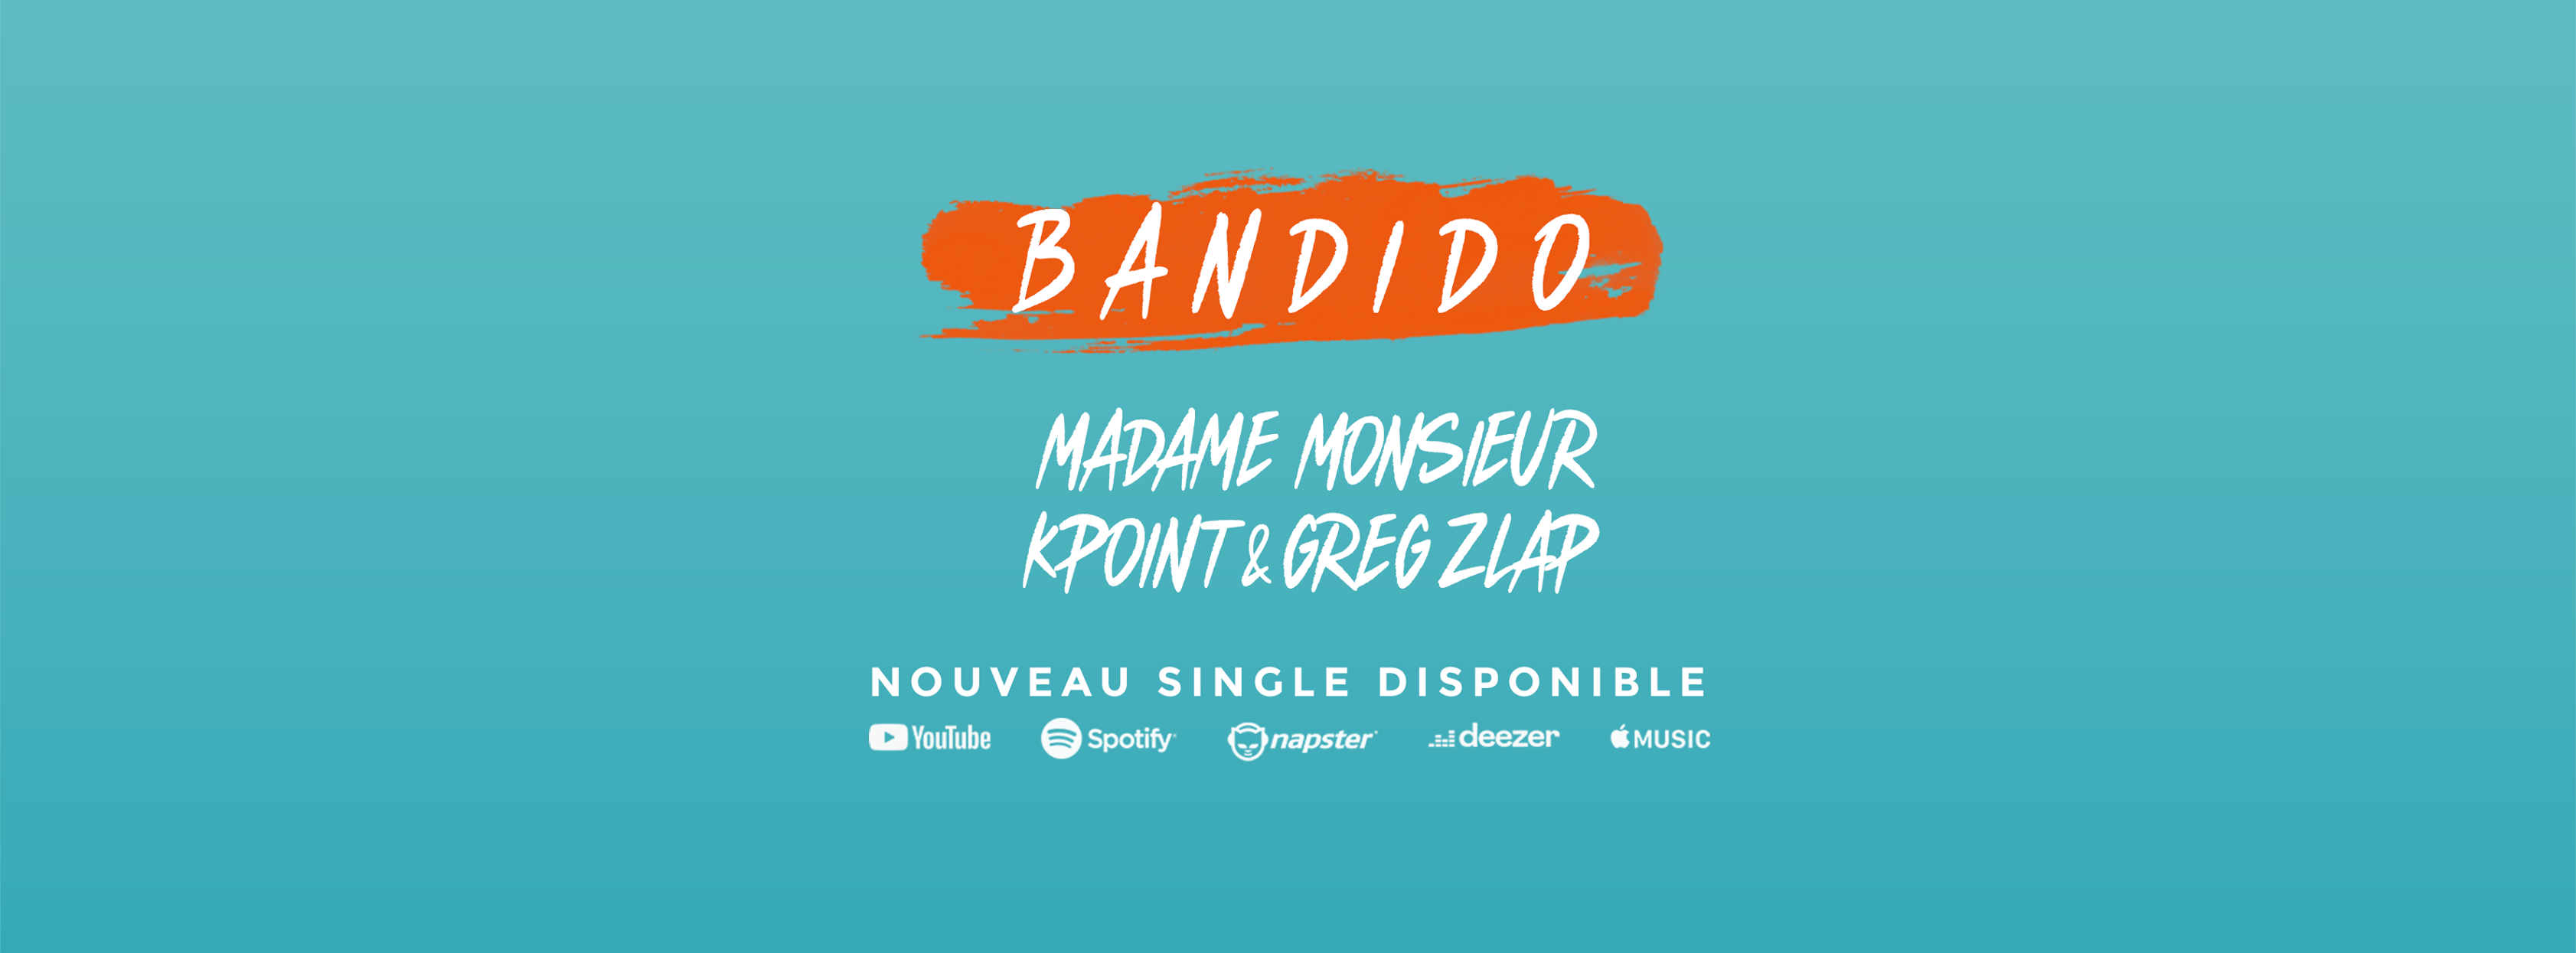 ÁUDIO: ‘Bandido’, o novo single dos Madame Monsieur